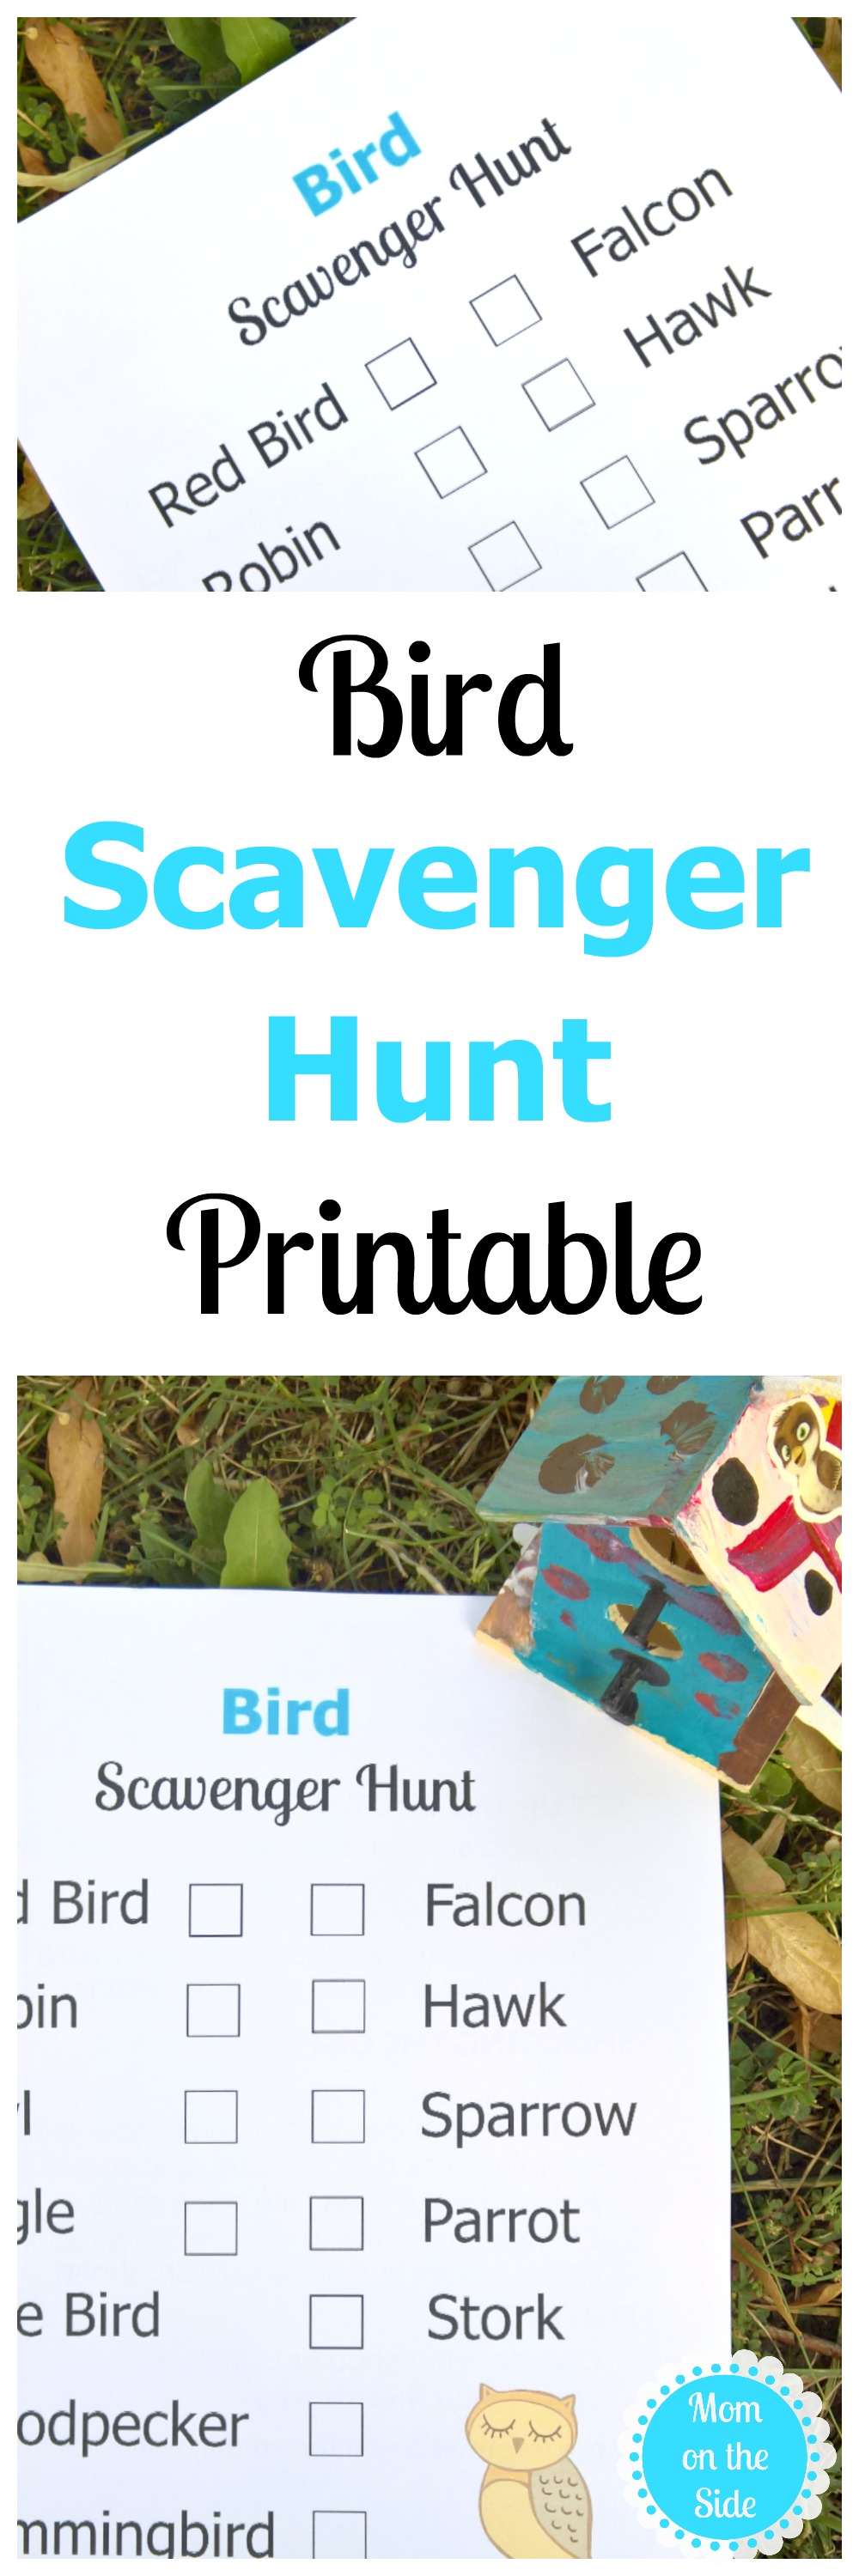 Printable Bird Scavenger Hunt Clues